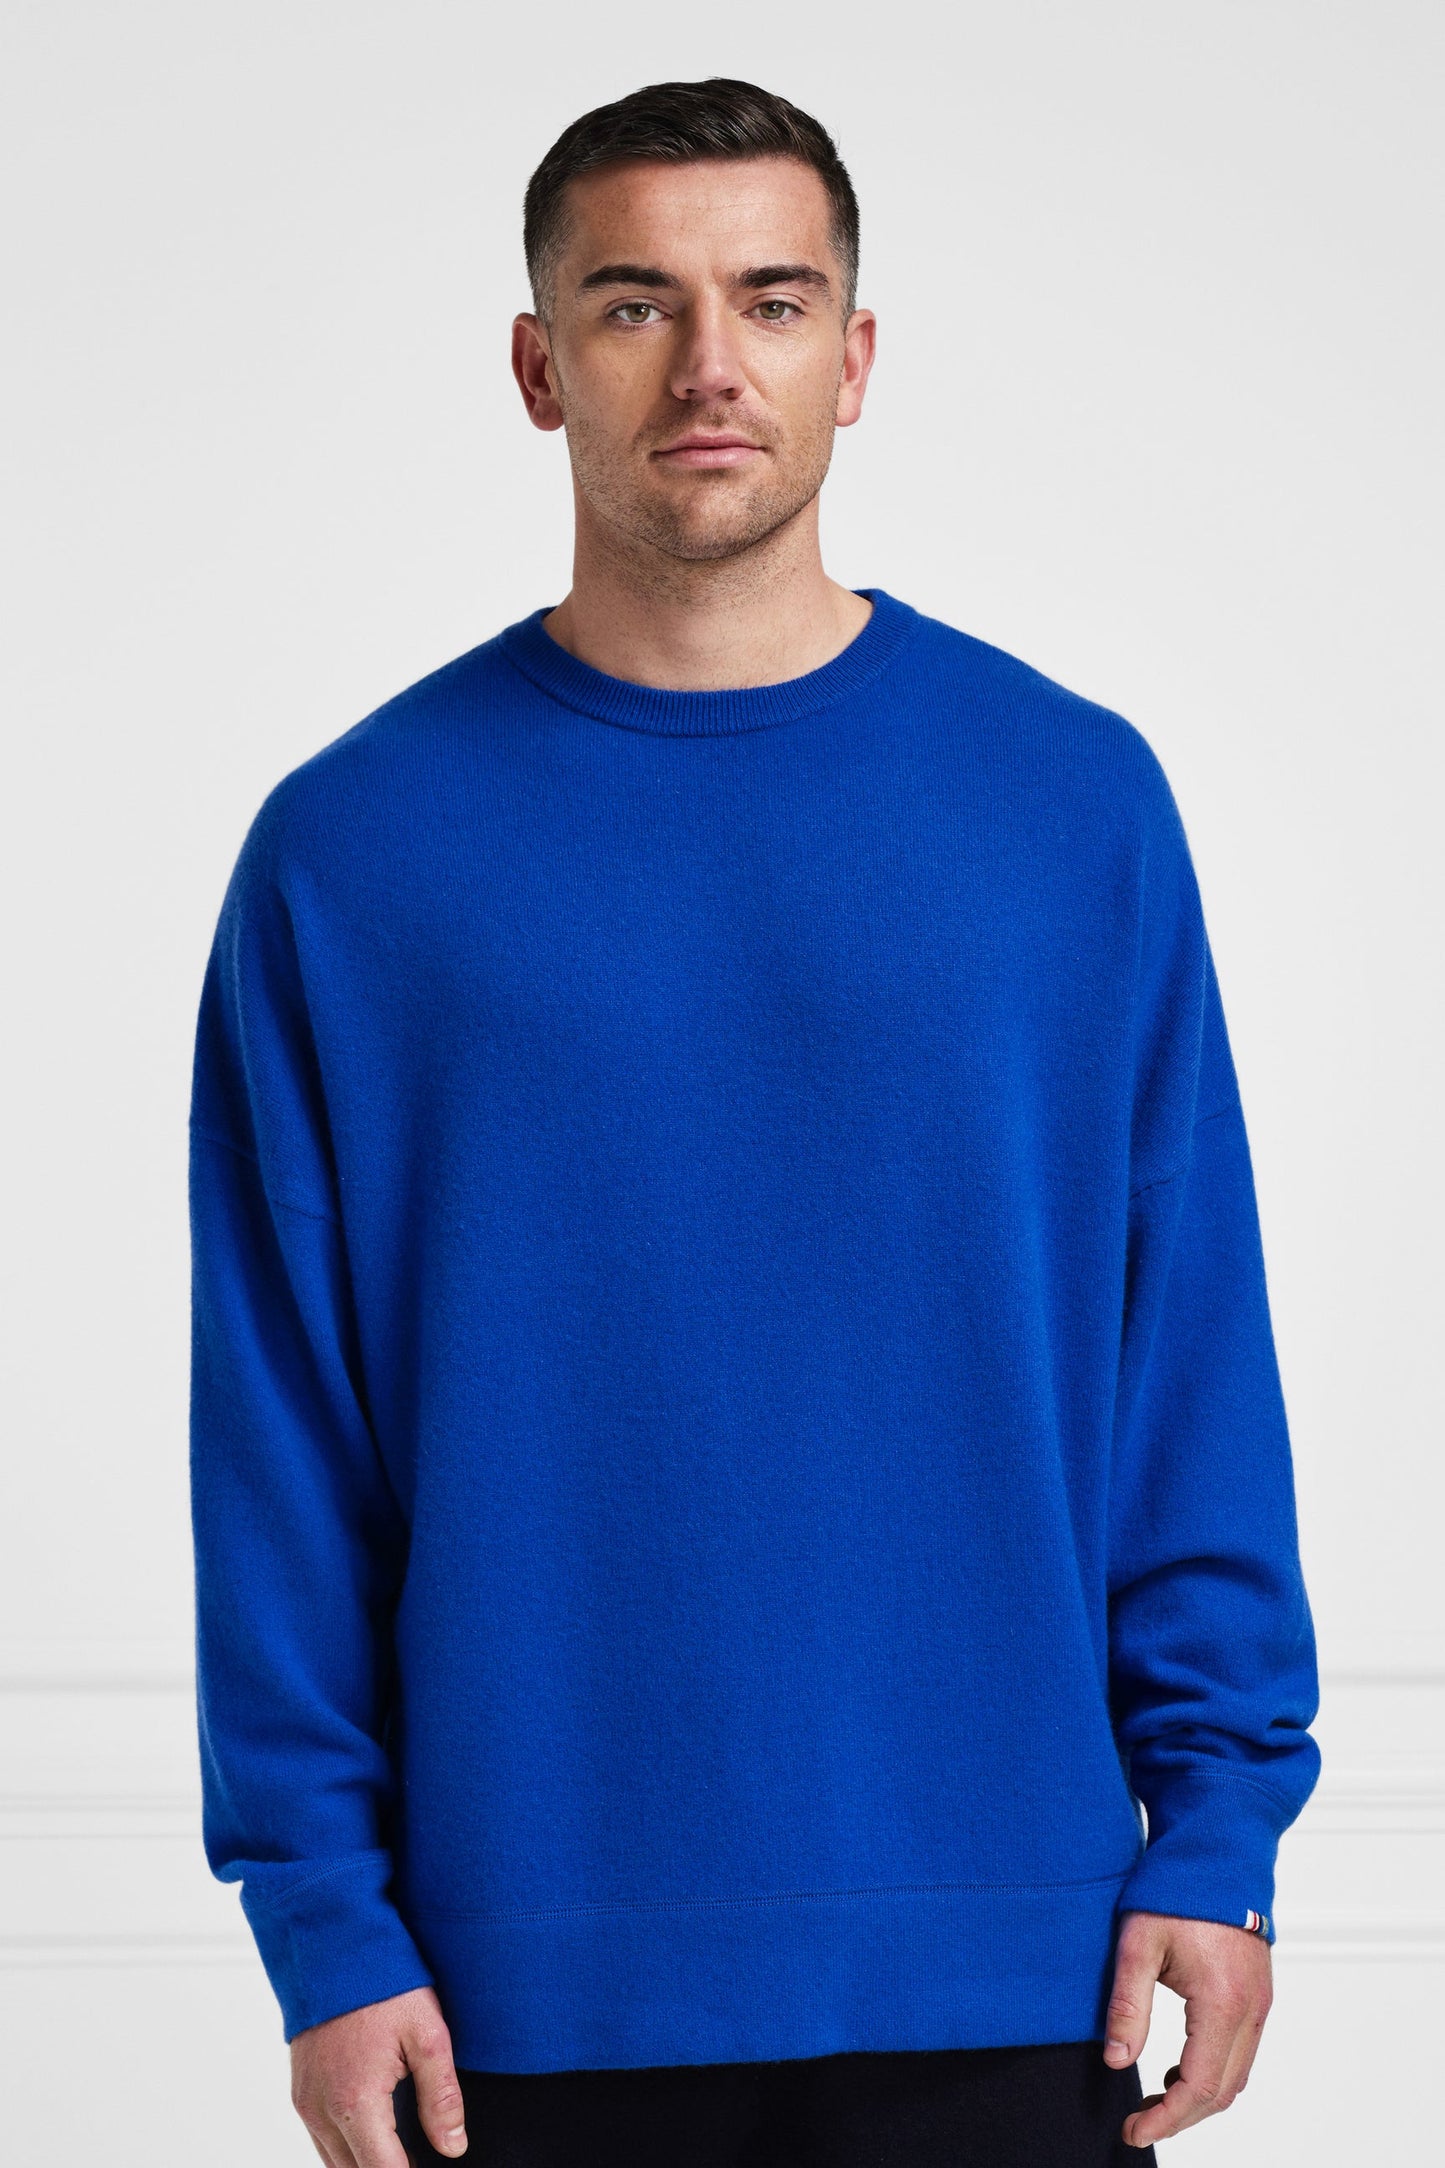 No 315, Sweat, Primary Blue, Sweater